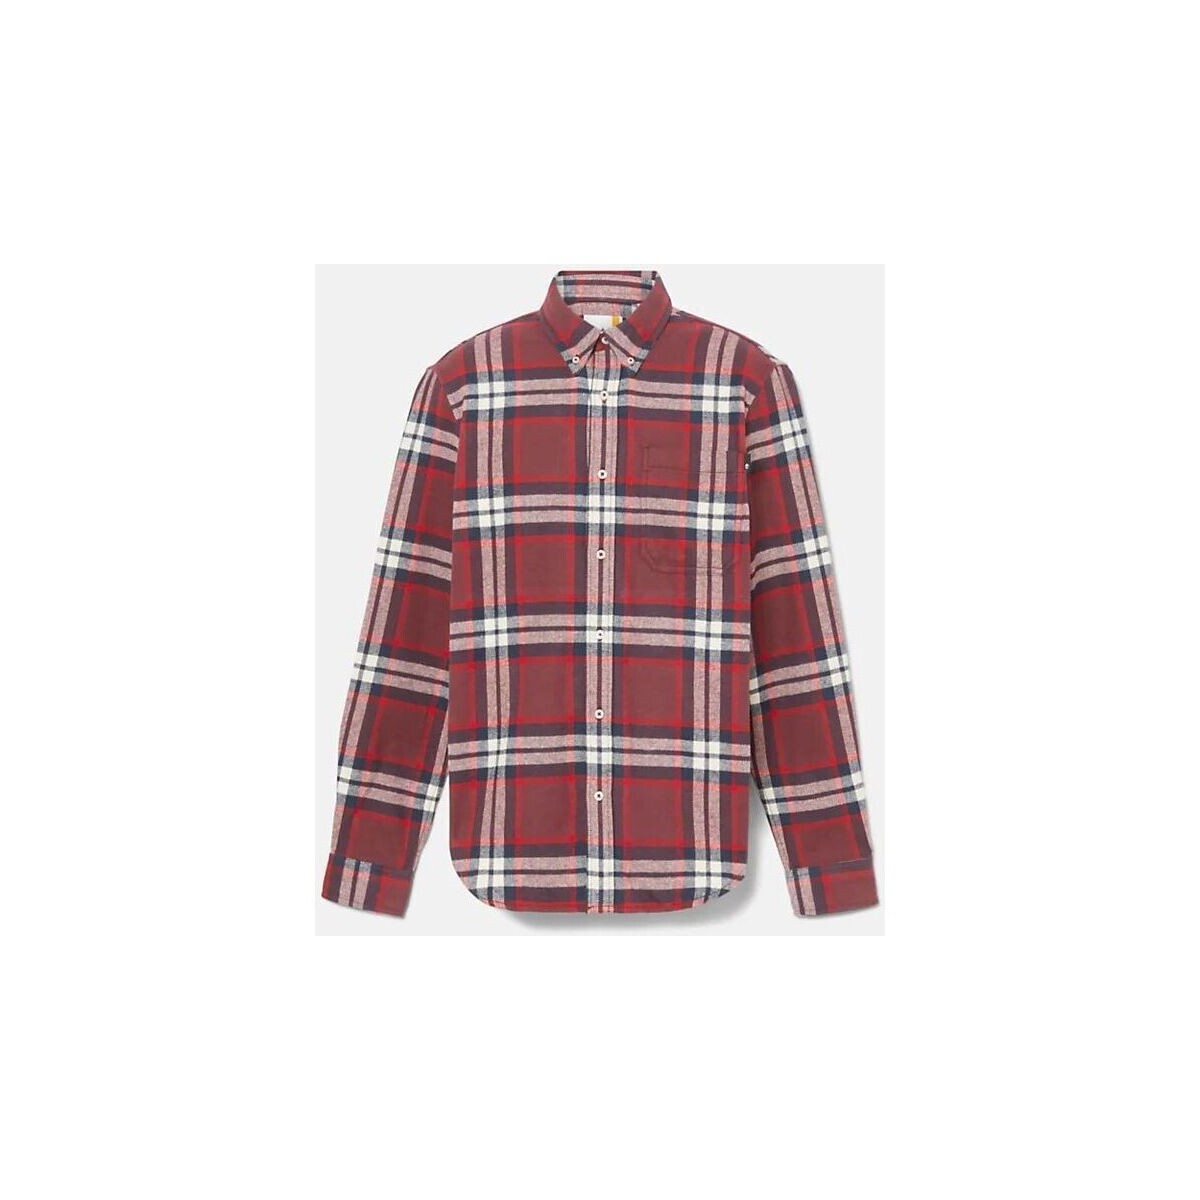 Vêtements Homme Chemises manches longues Timberland TB0A6GKH HEAVY FLANNEL PLAID-J60 PORTR Rouge